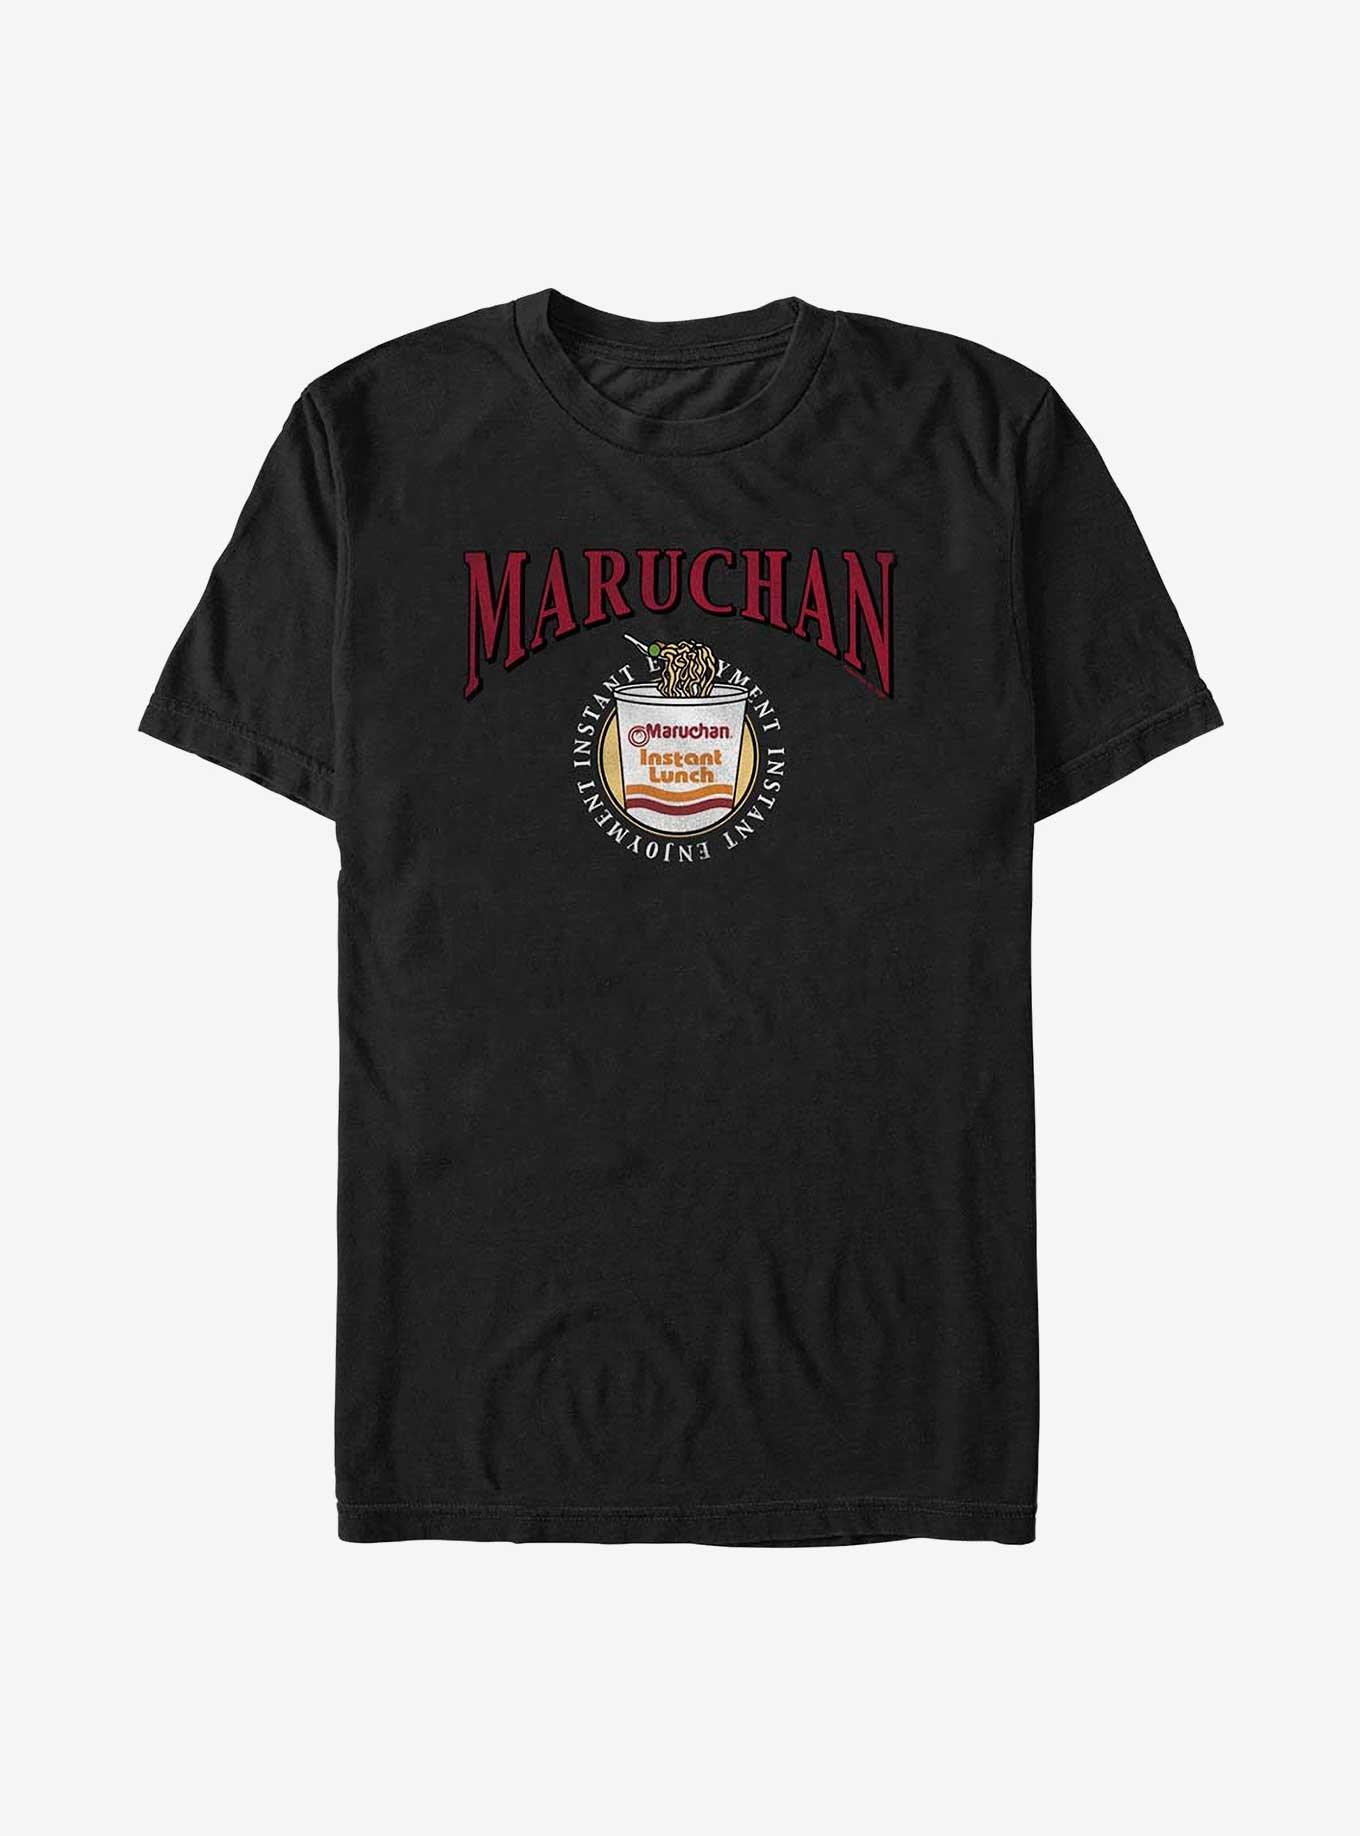 Maruchan Instant Enjoyment T-Shirt